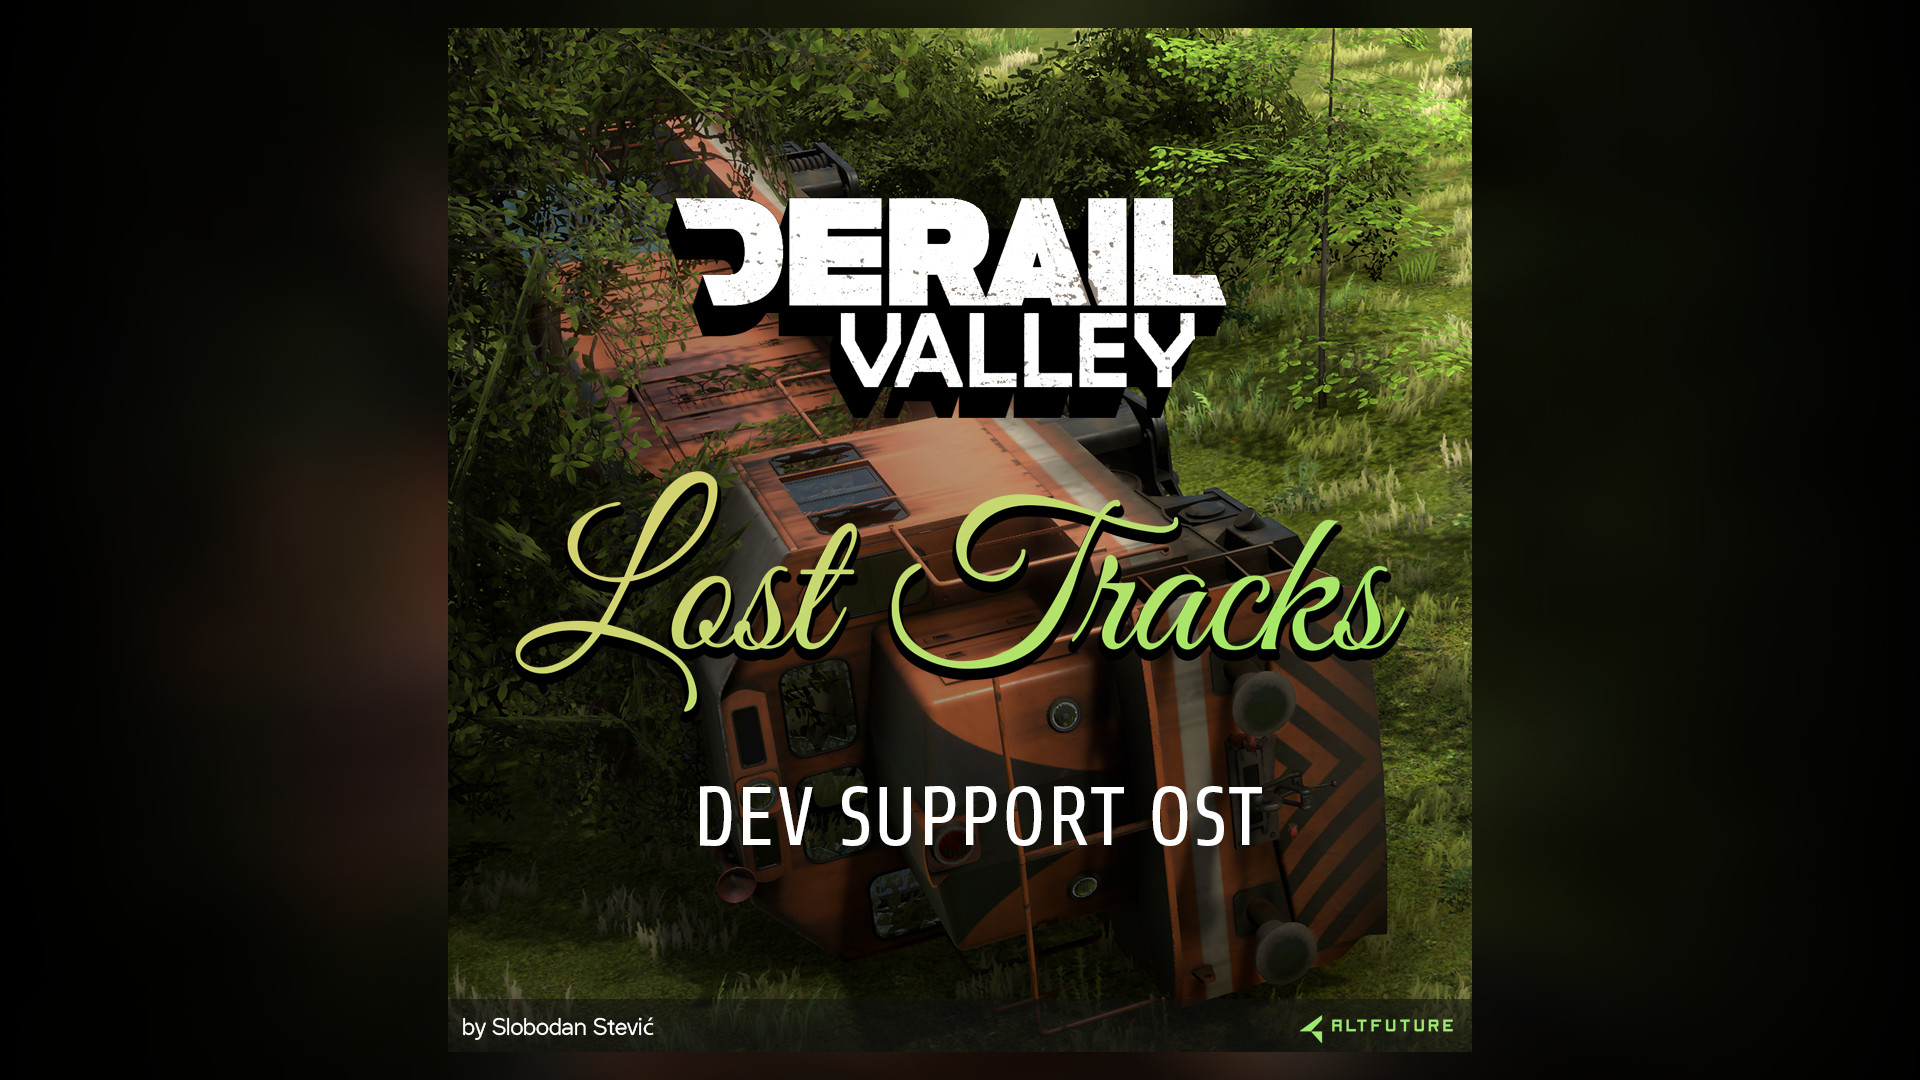 Dev support. Dereil Valley RK.DX JN ufhf;f cnbdf. Derail Valley ключ от гаража Стива.